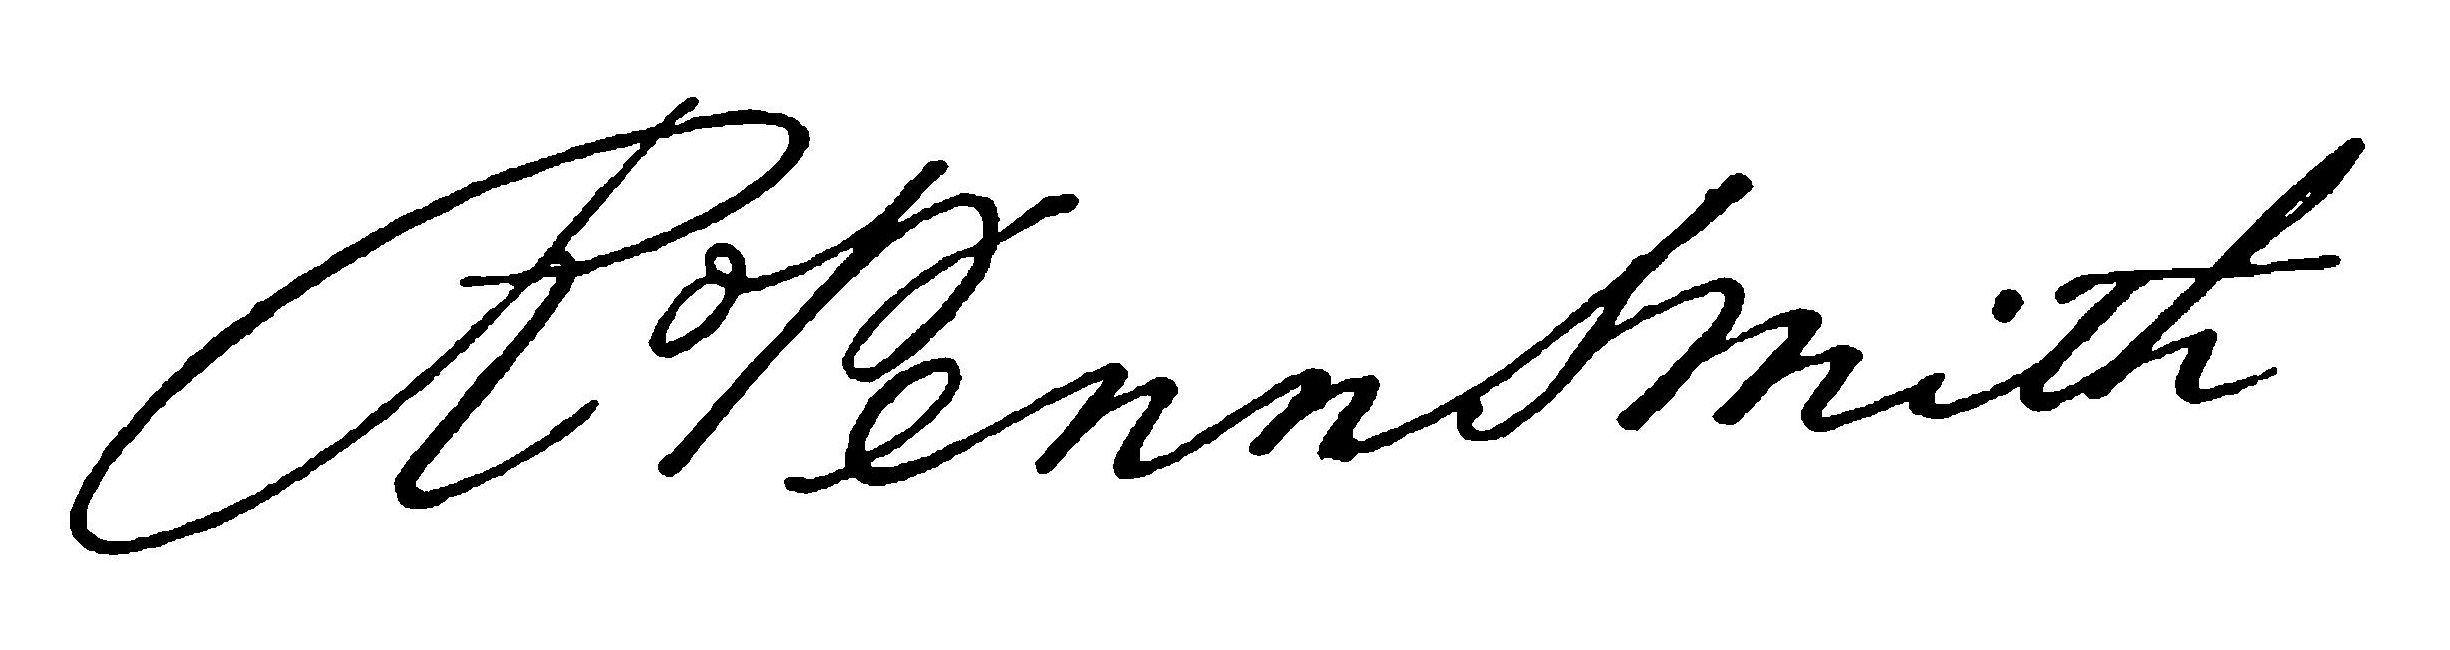 Signature of R Penn Smith